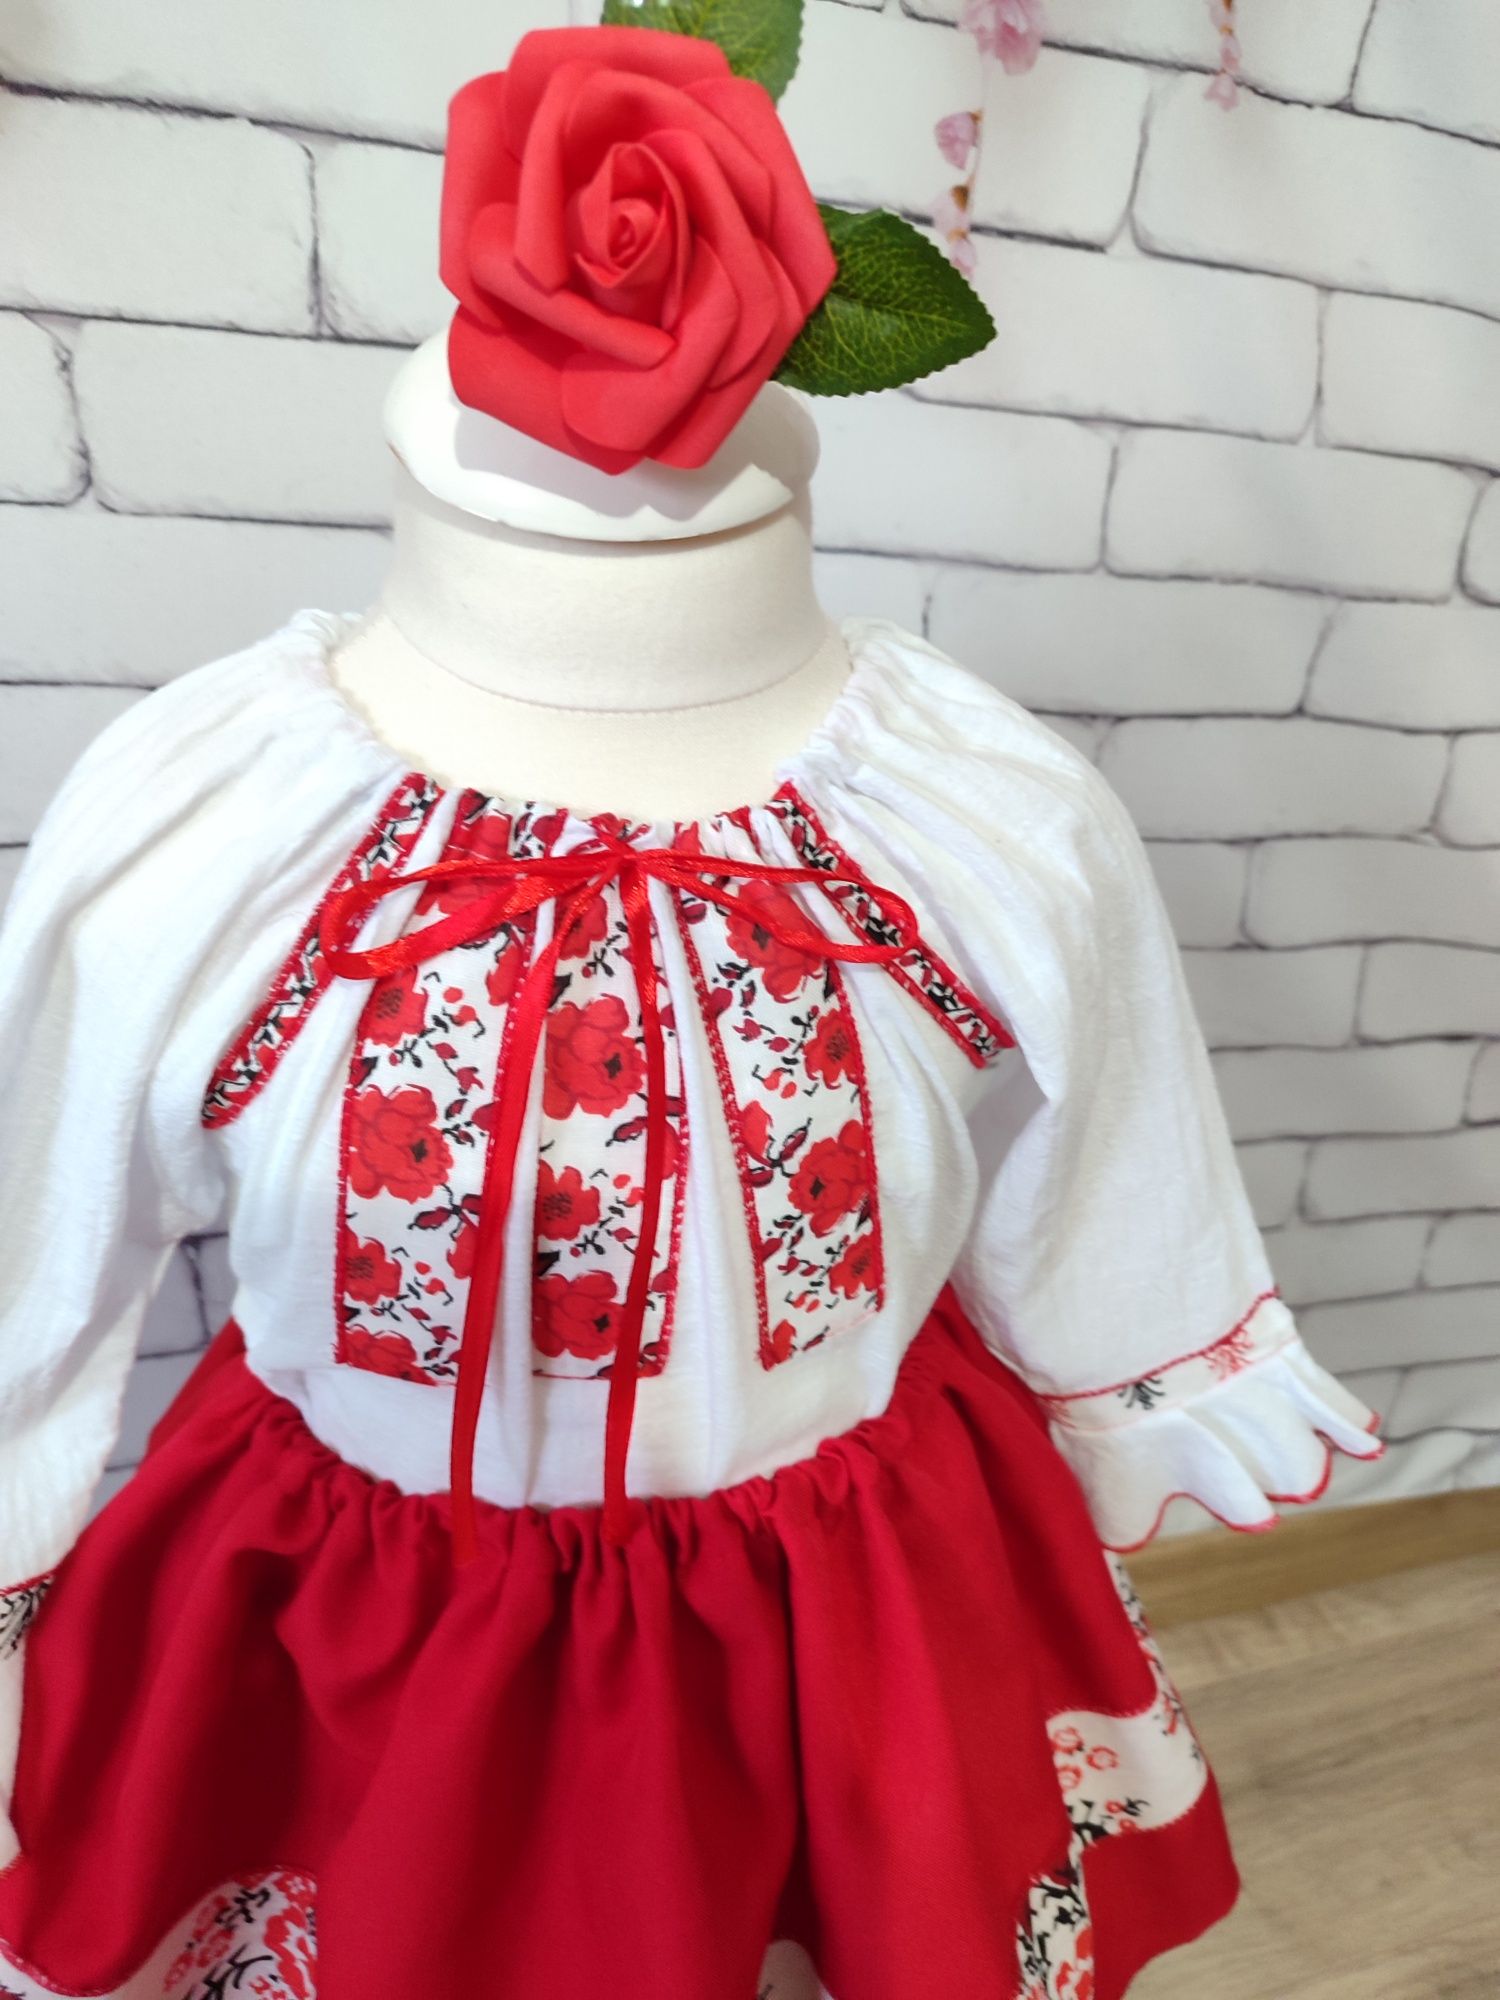 Costum popular tradițional fetite serbare ie